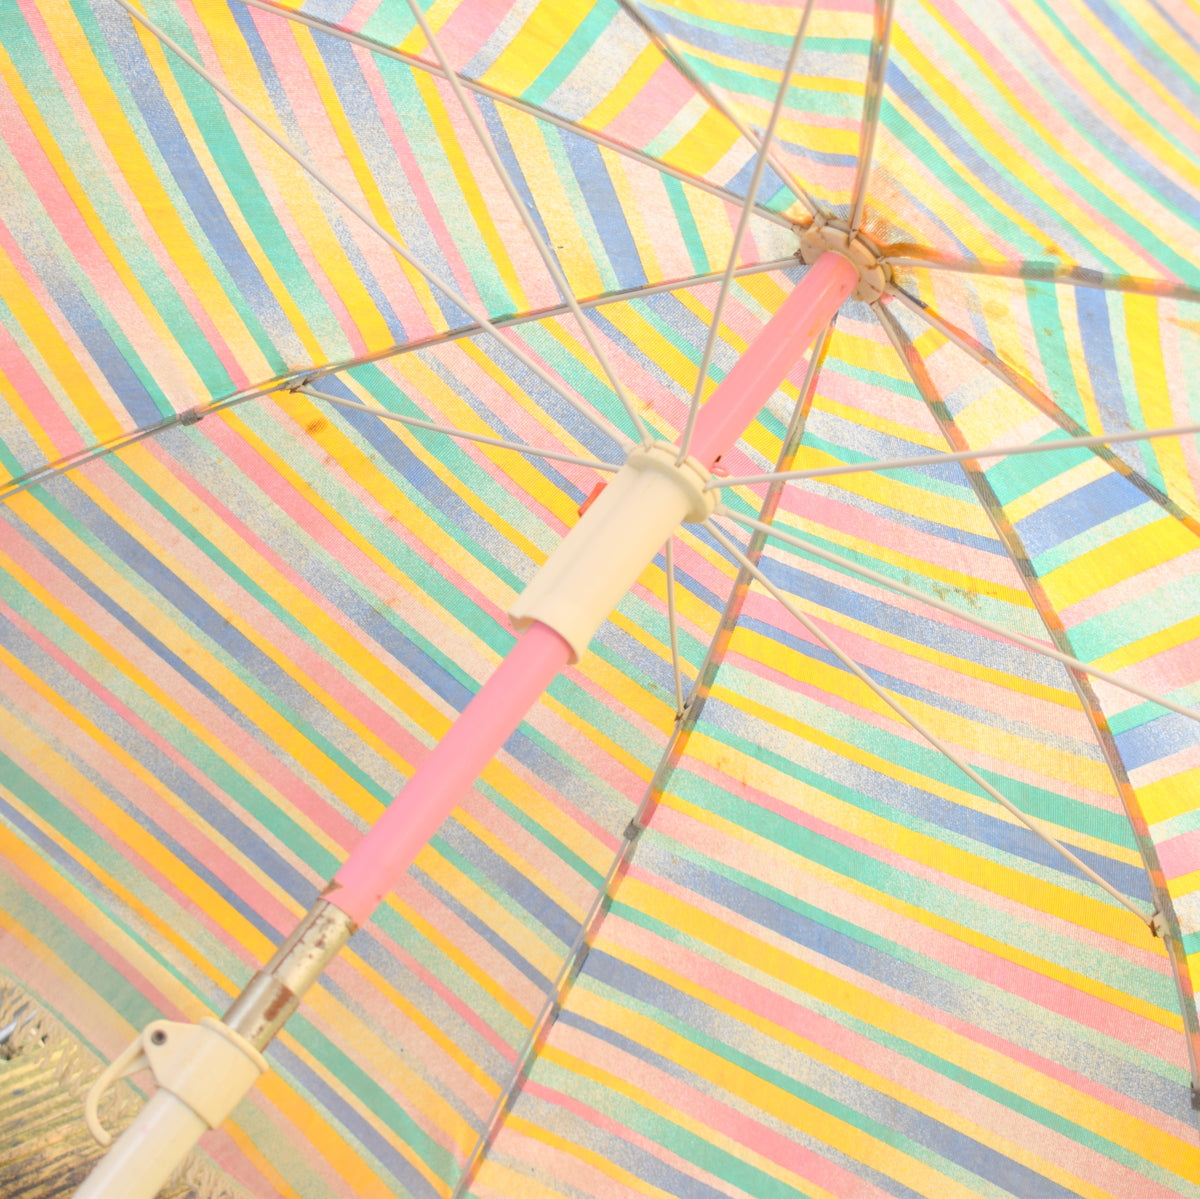 Vintage 1980s - Garden Parasol / Umbrella - Pink, Yellow, Mint